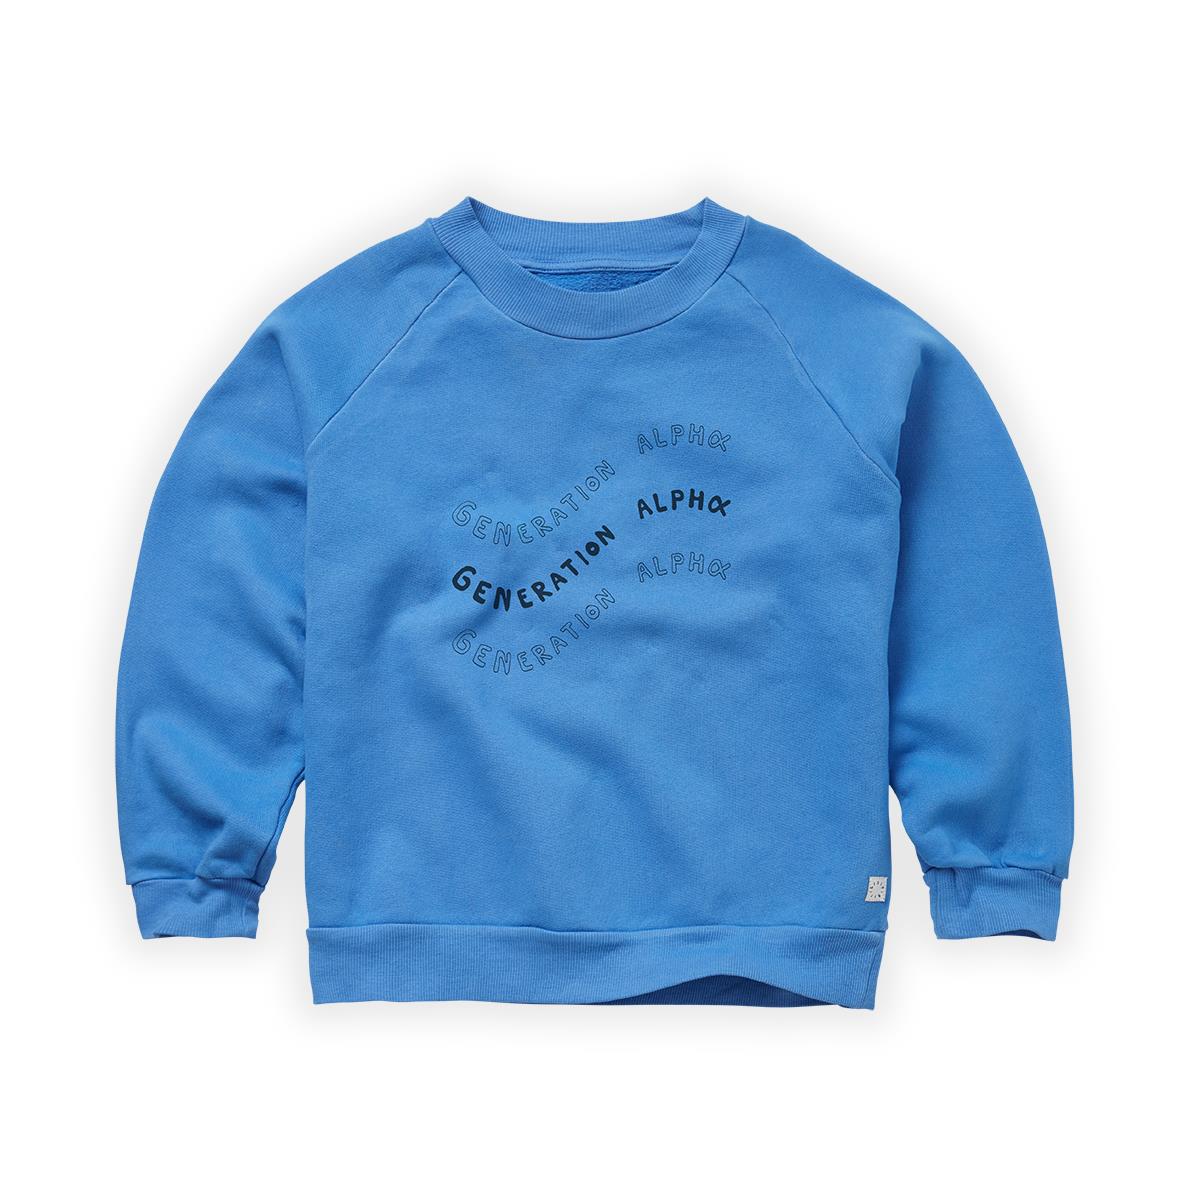 Sproet & Sprout - Grandad sweater generation Alpha